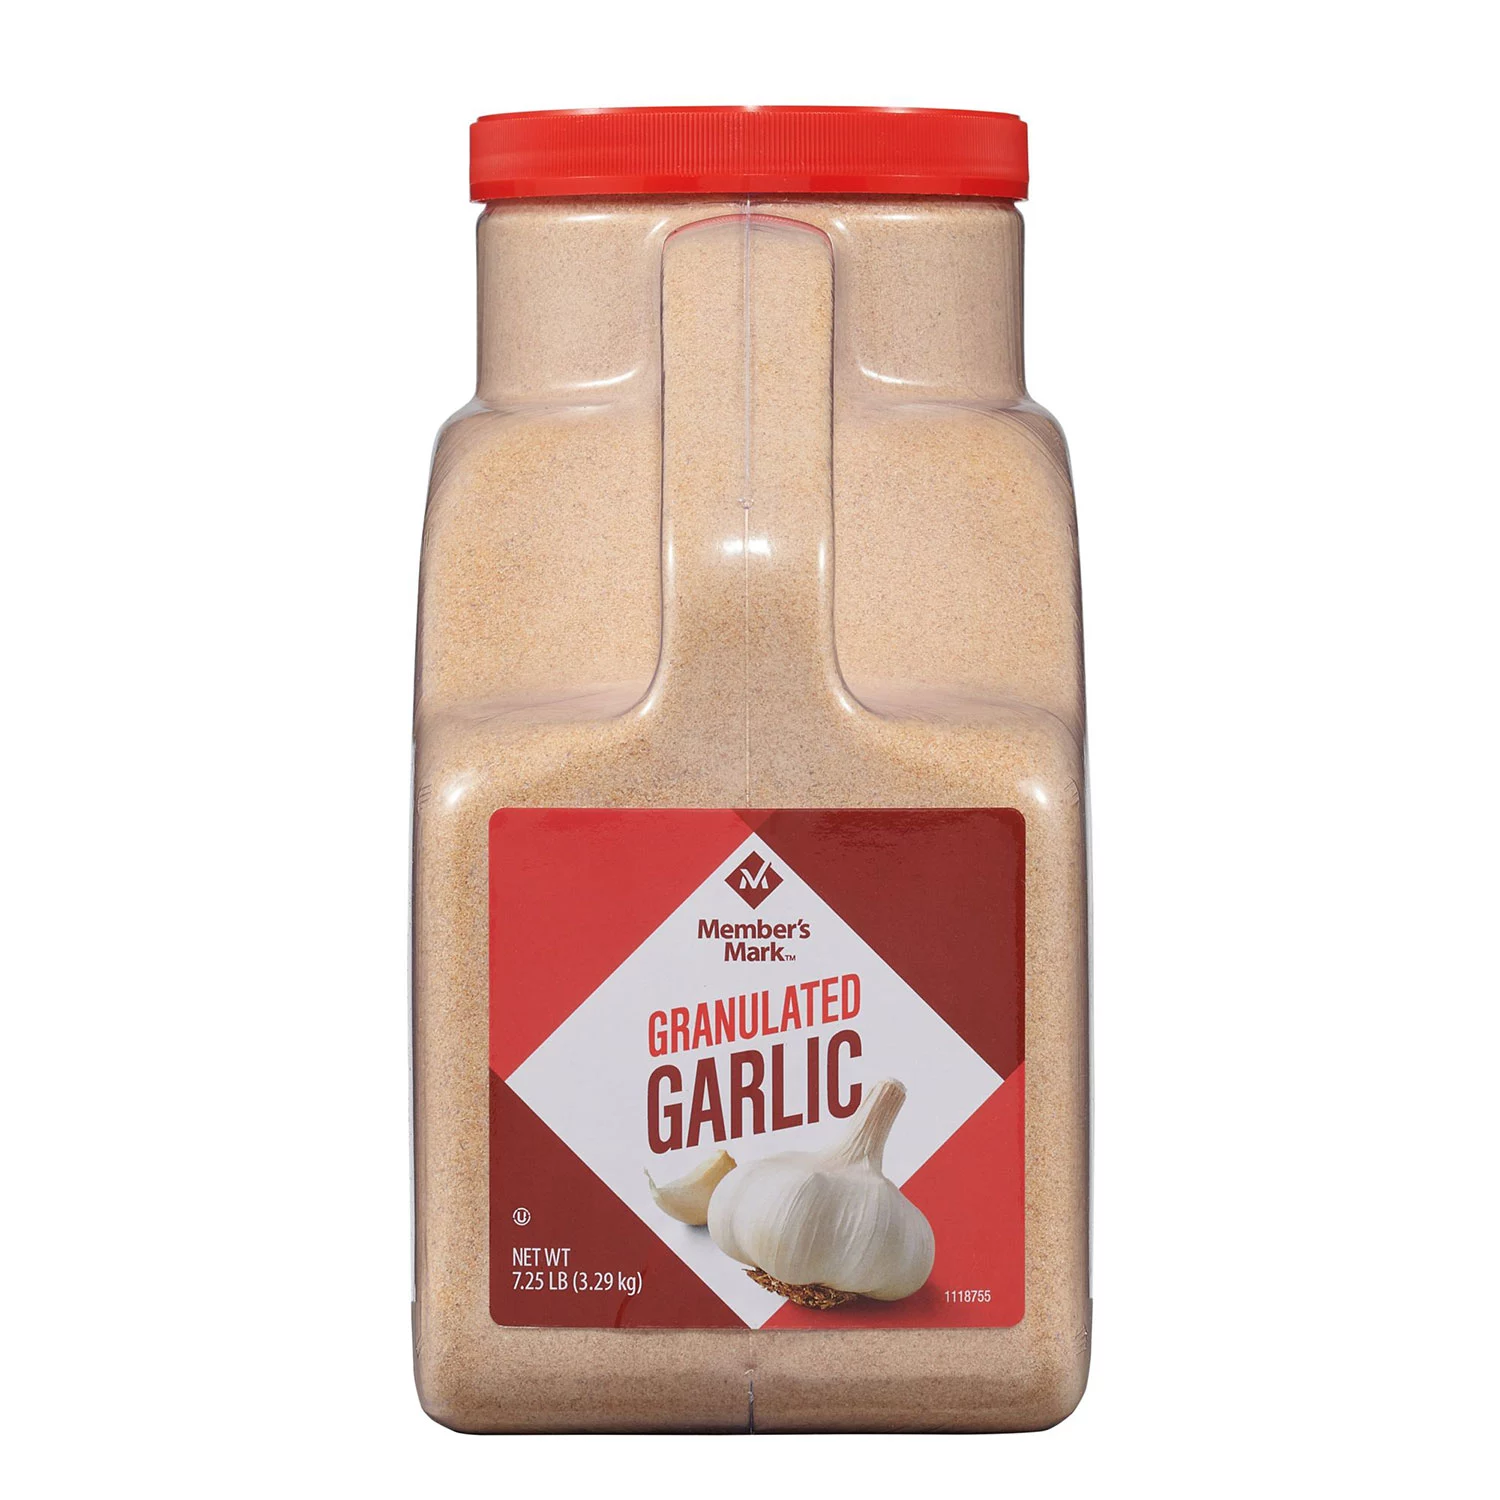 Member's Mark Granulated Garlic